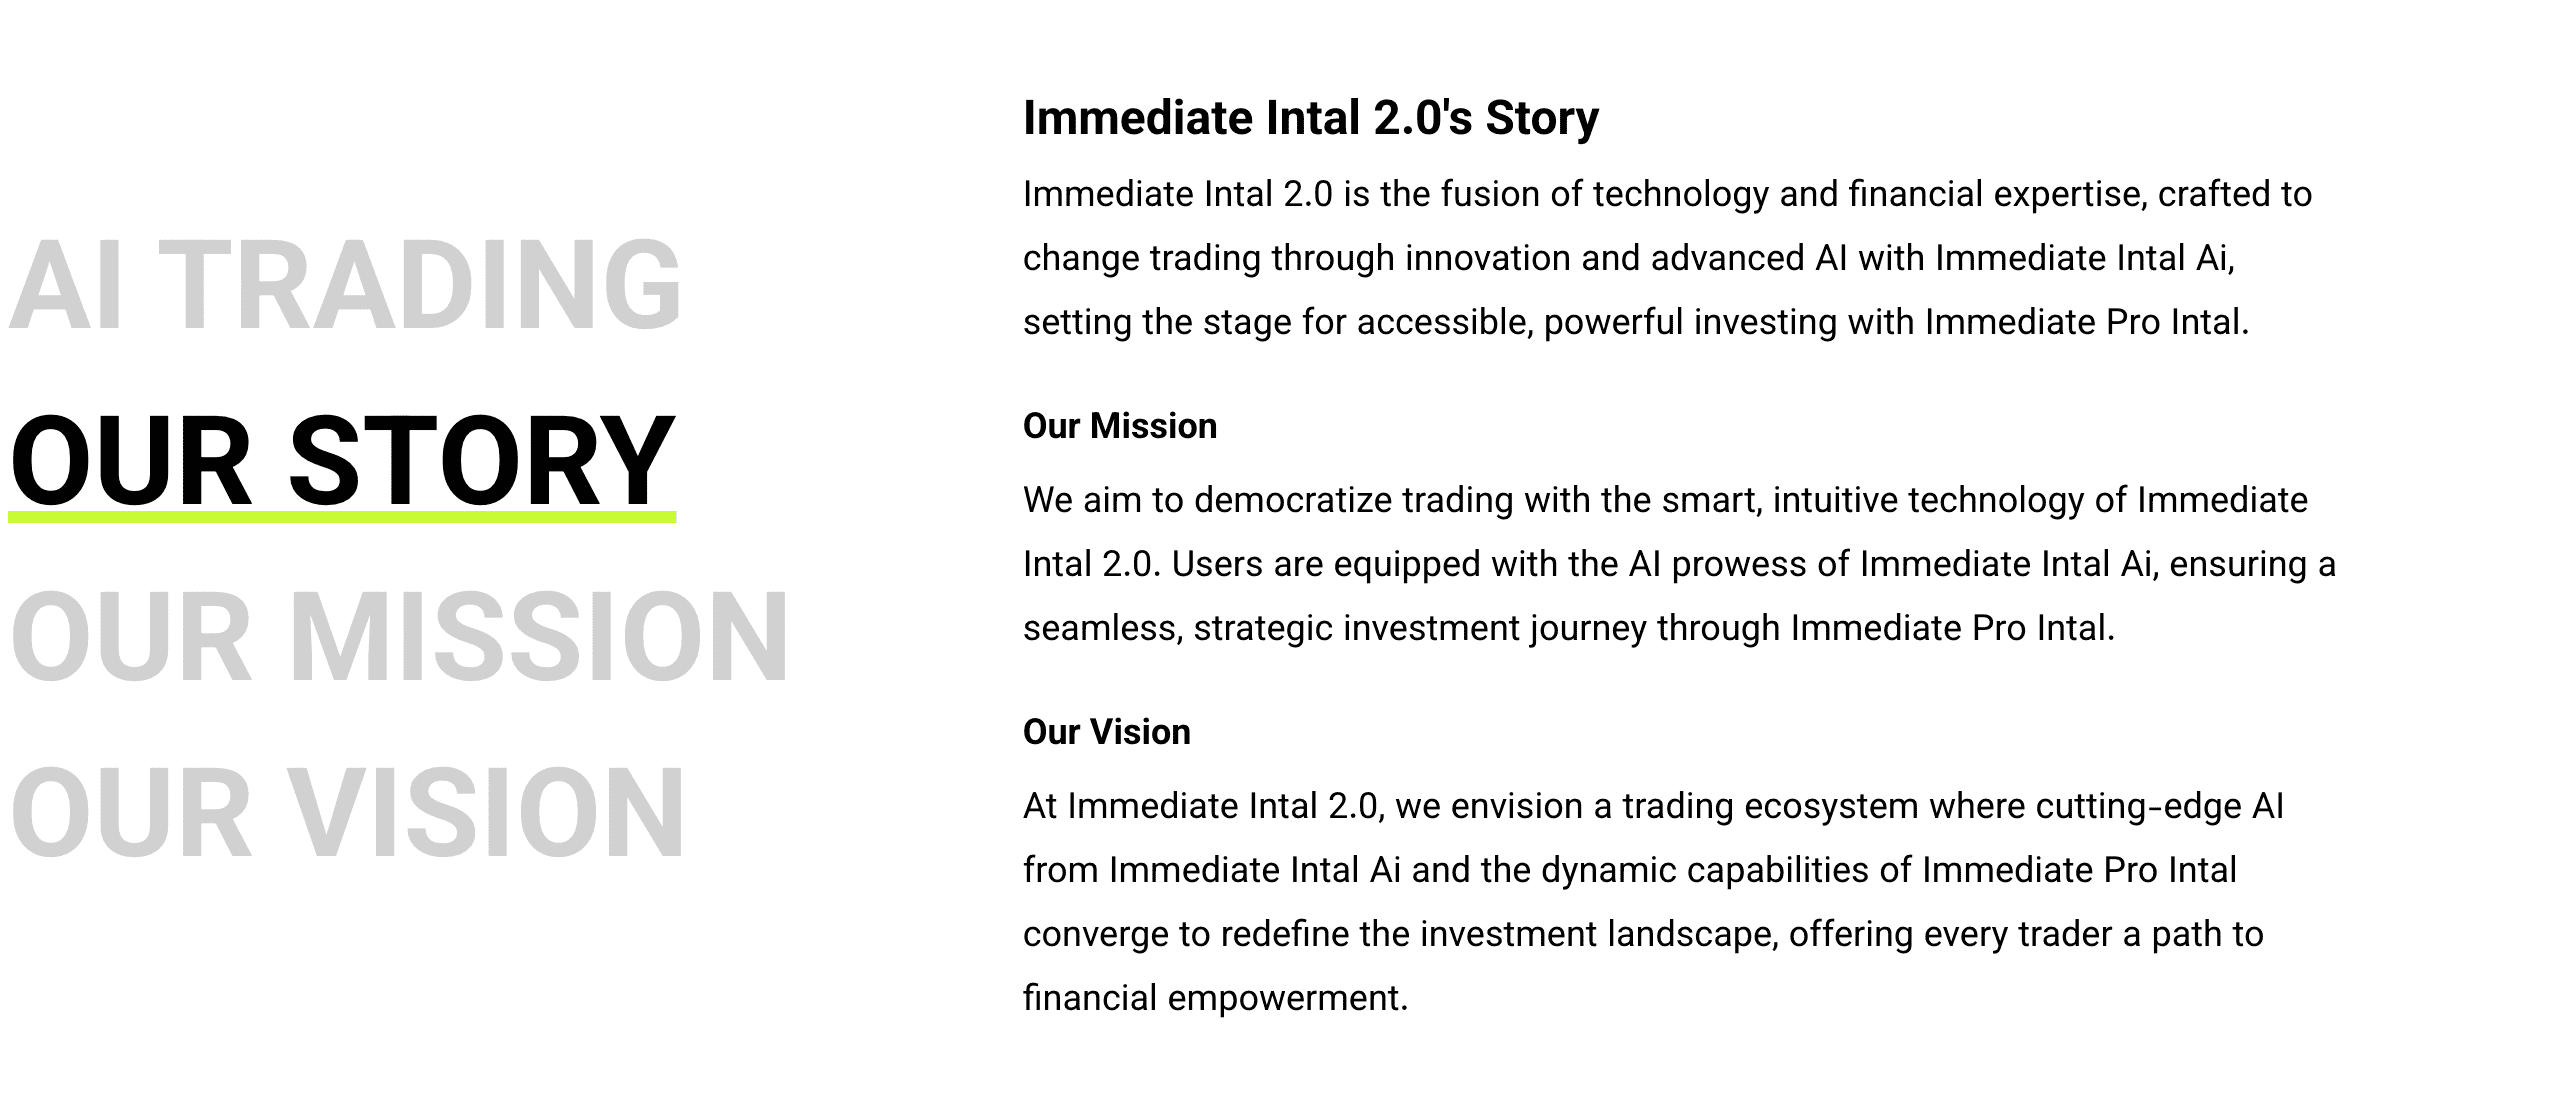 Immediate Intal 2.0 (Pro) vision